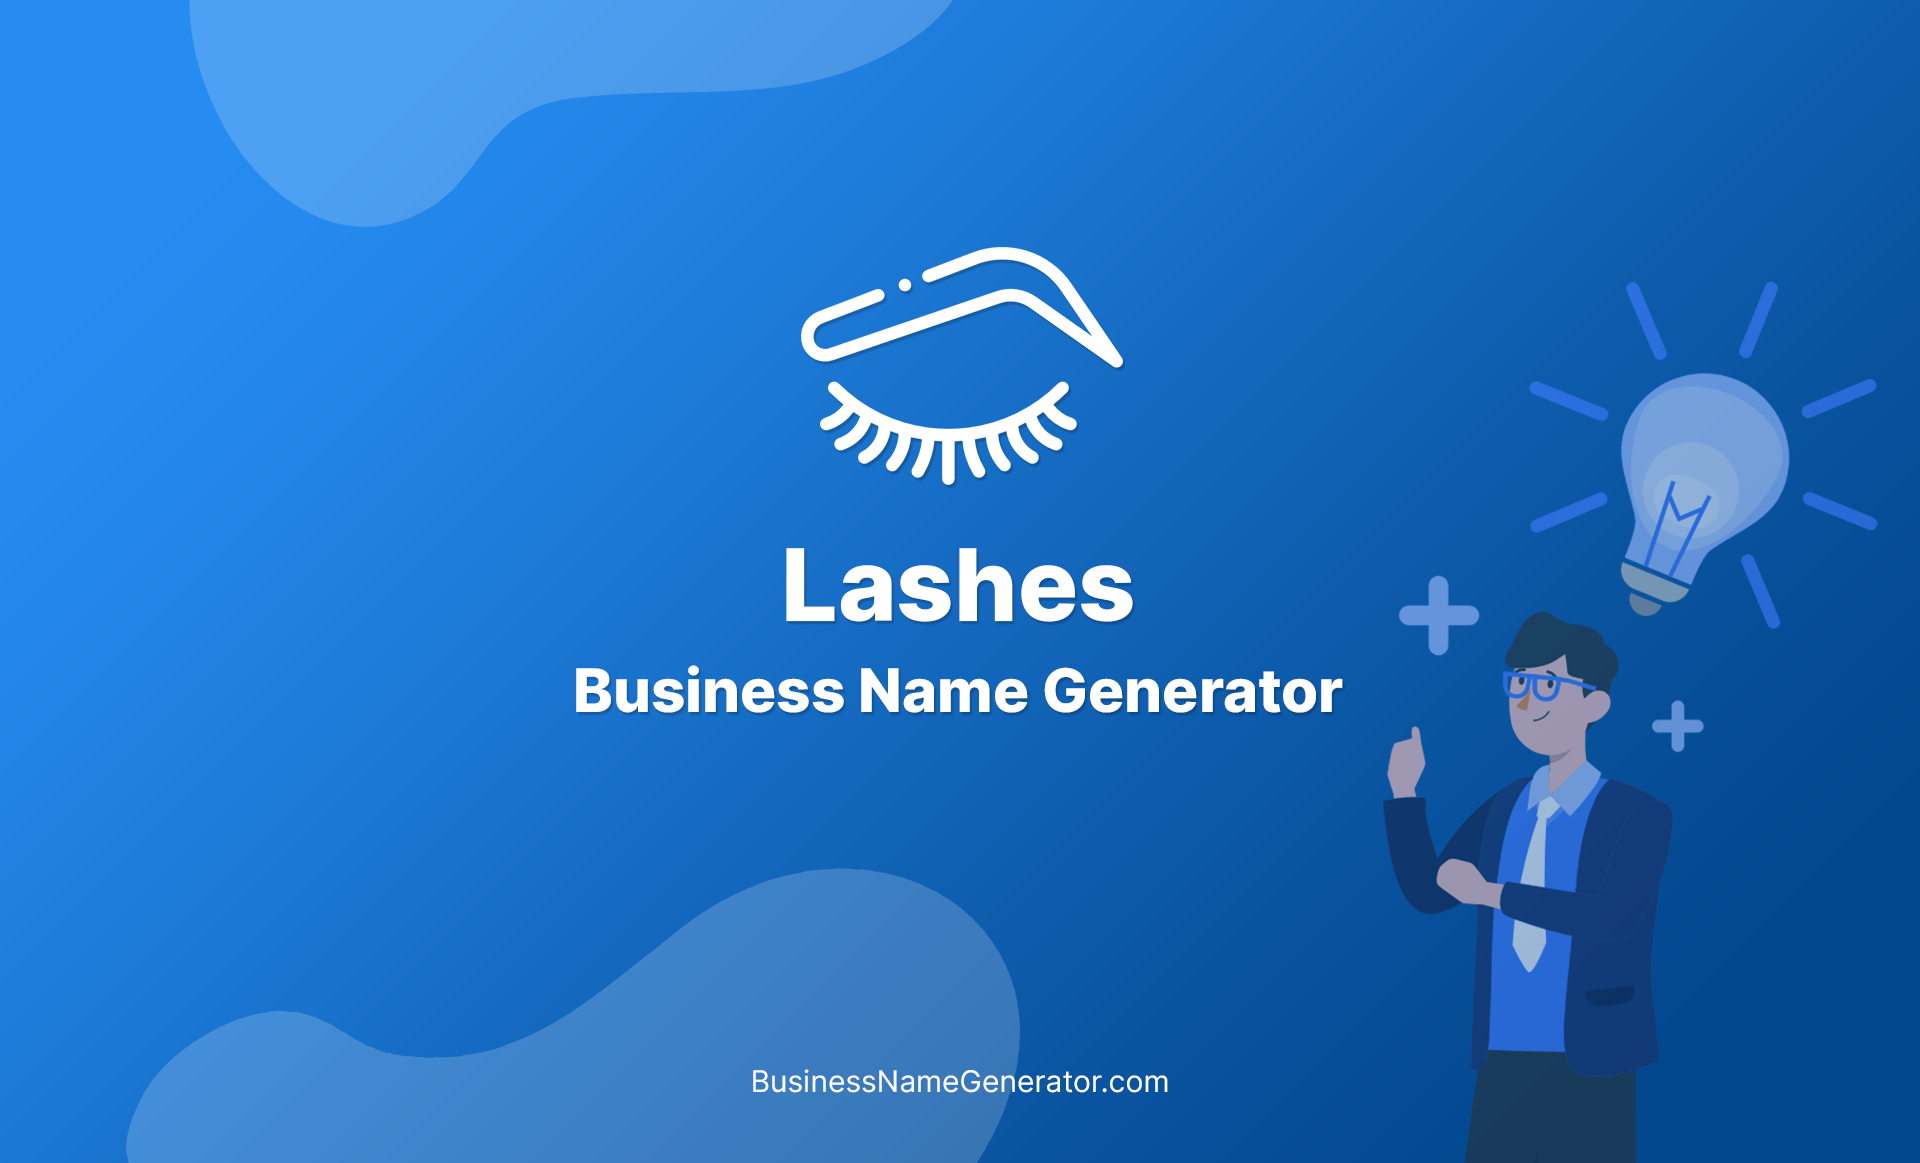 Lashes Business Name Generator